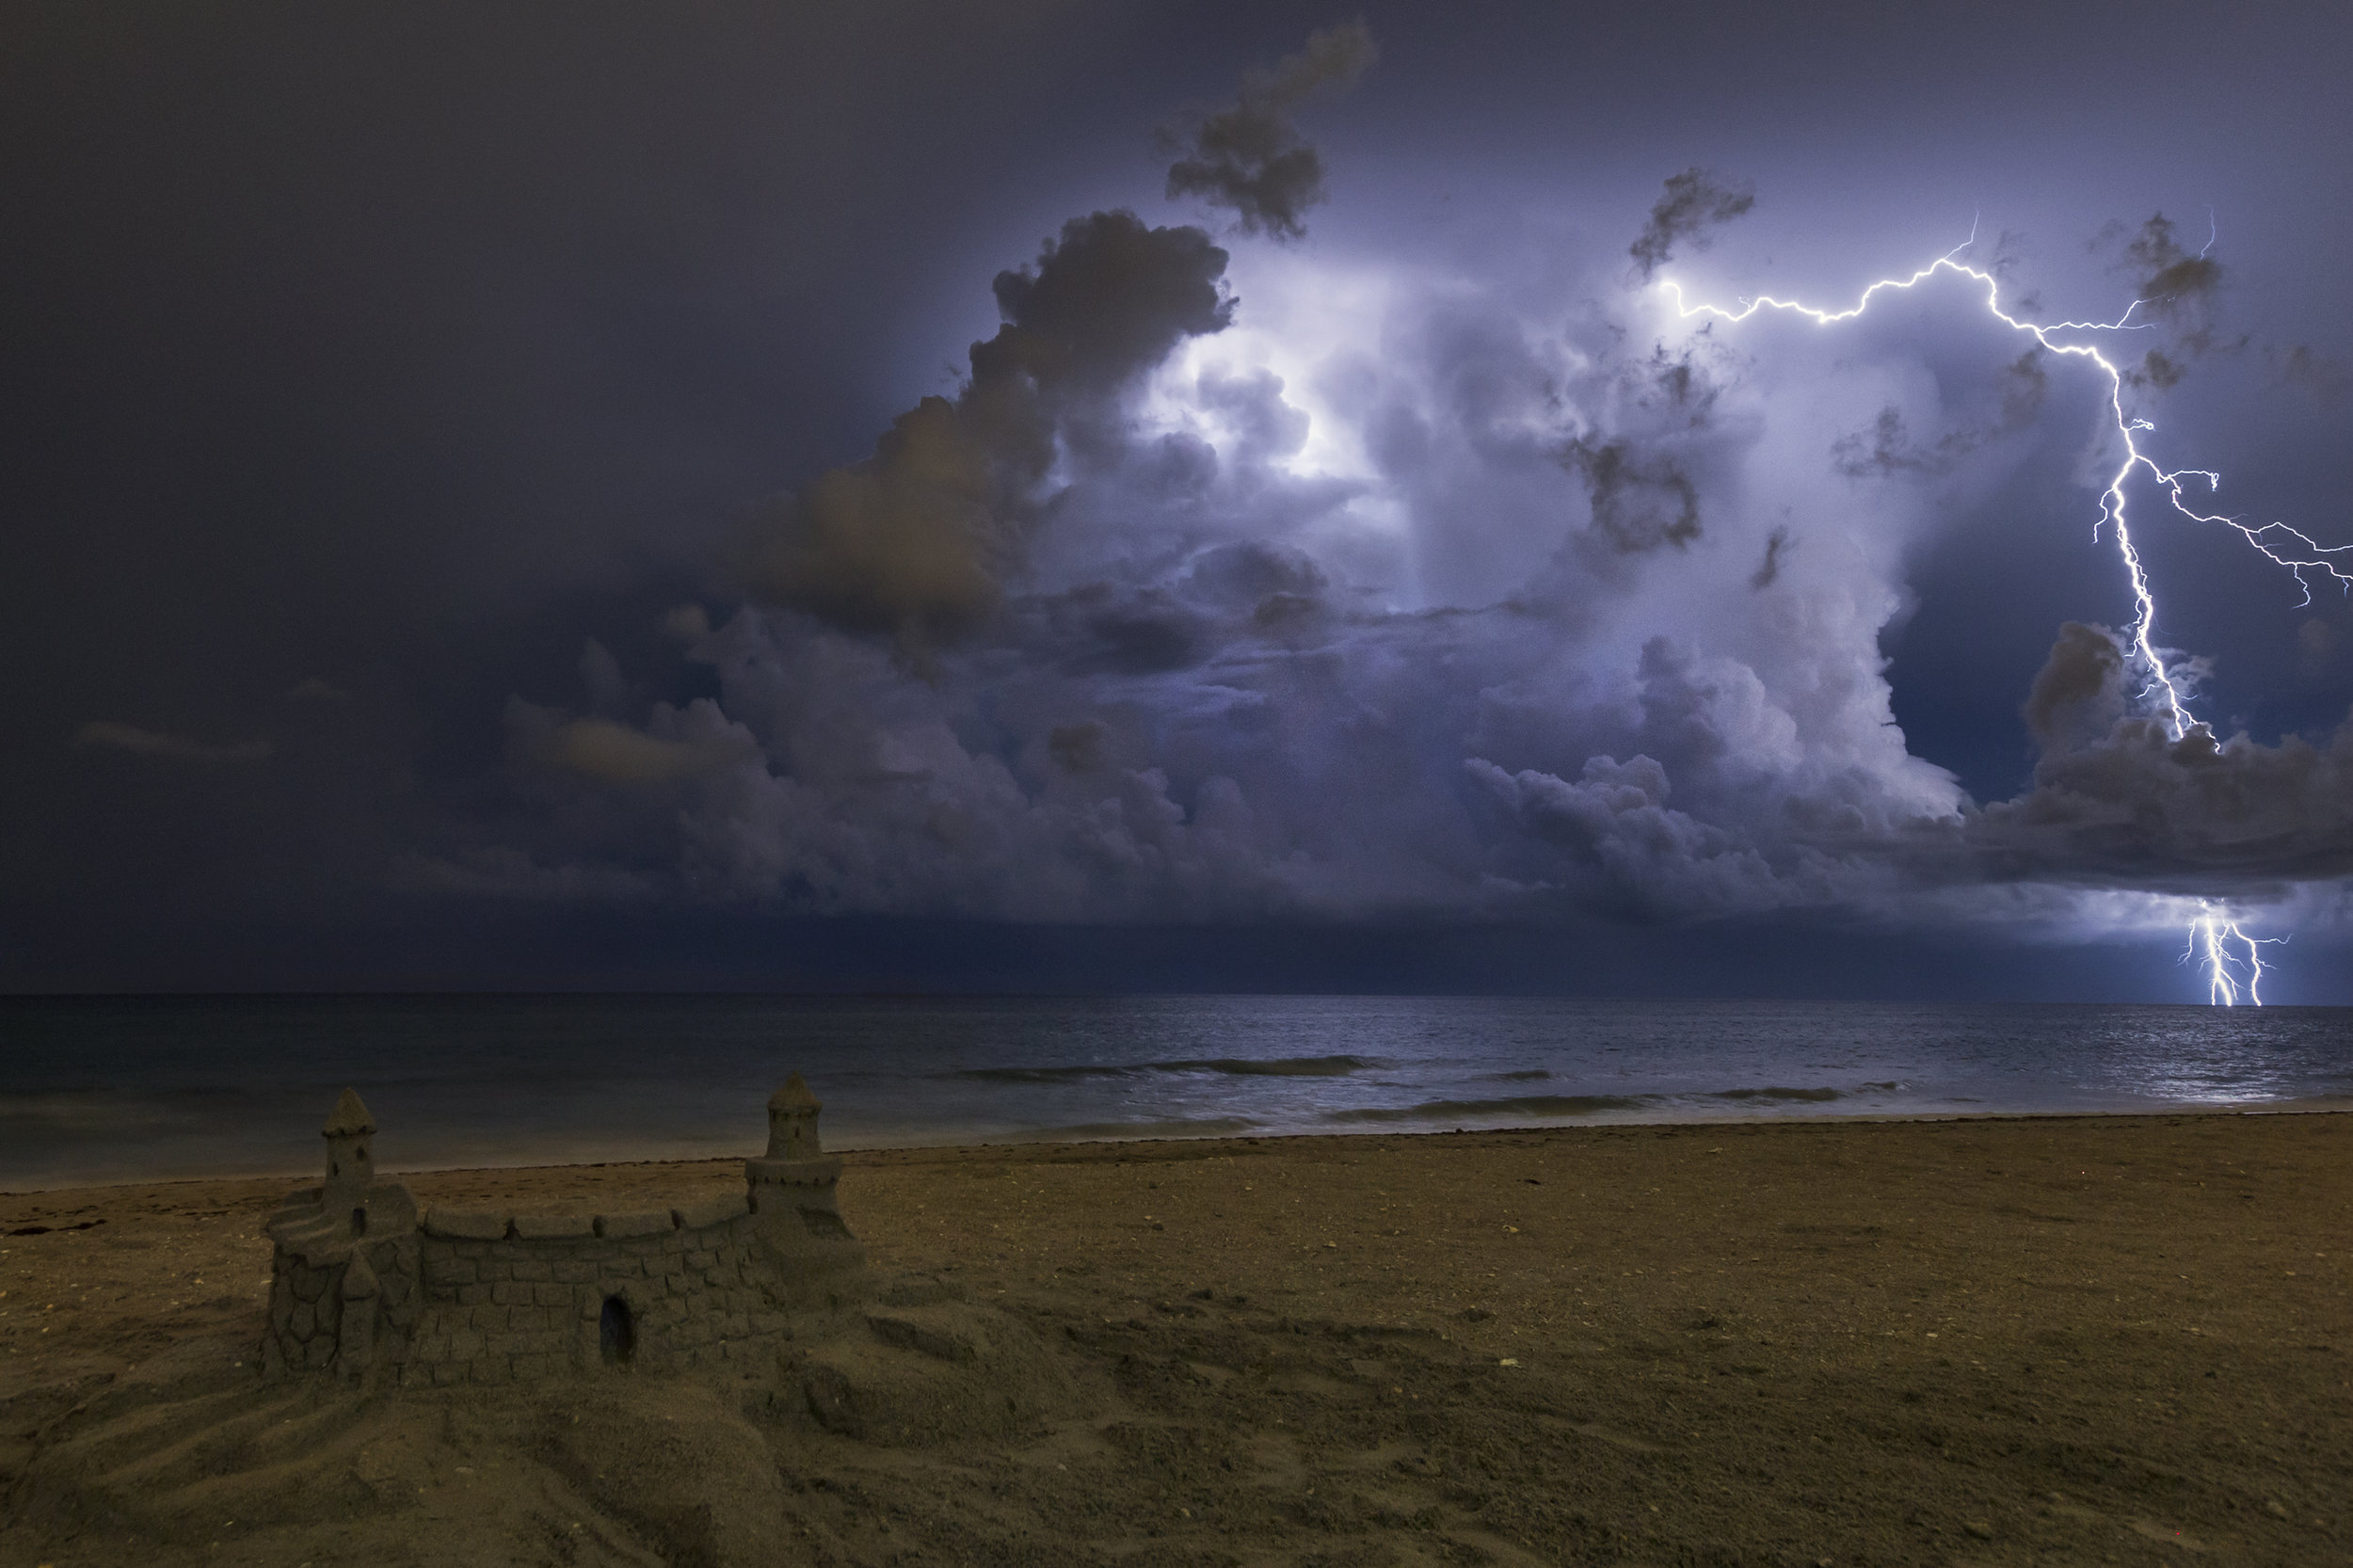  Thunderstorm off the coast of Palm Beach, Florida.&nbsp; 